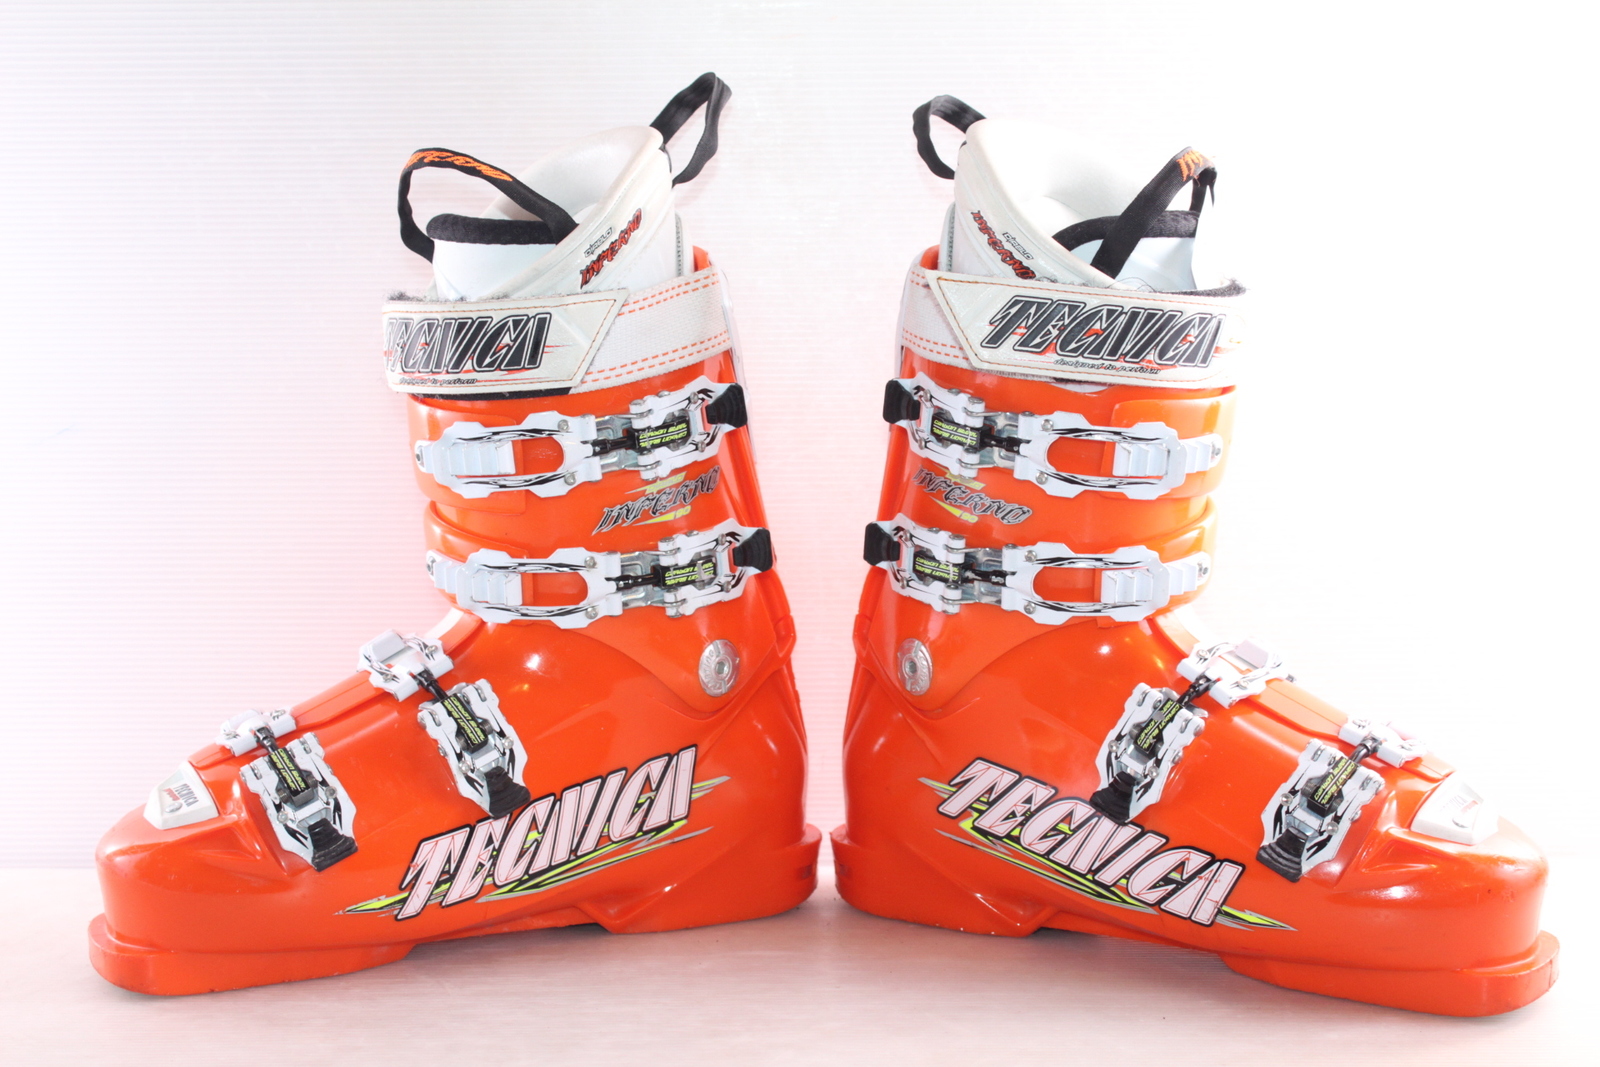 Lyžařské boty Tecnica Diablo Inferno 90 vel. EU42.5 flexe 90